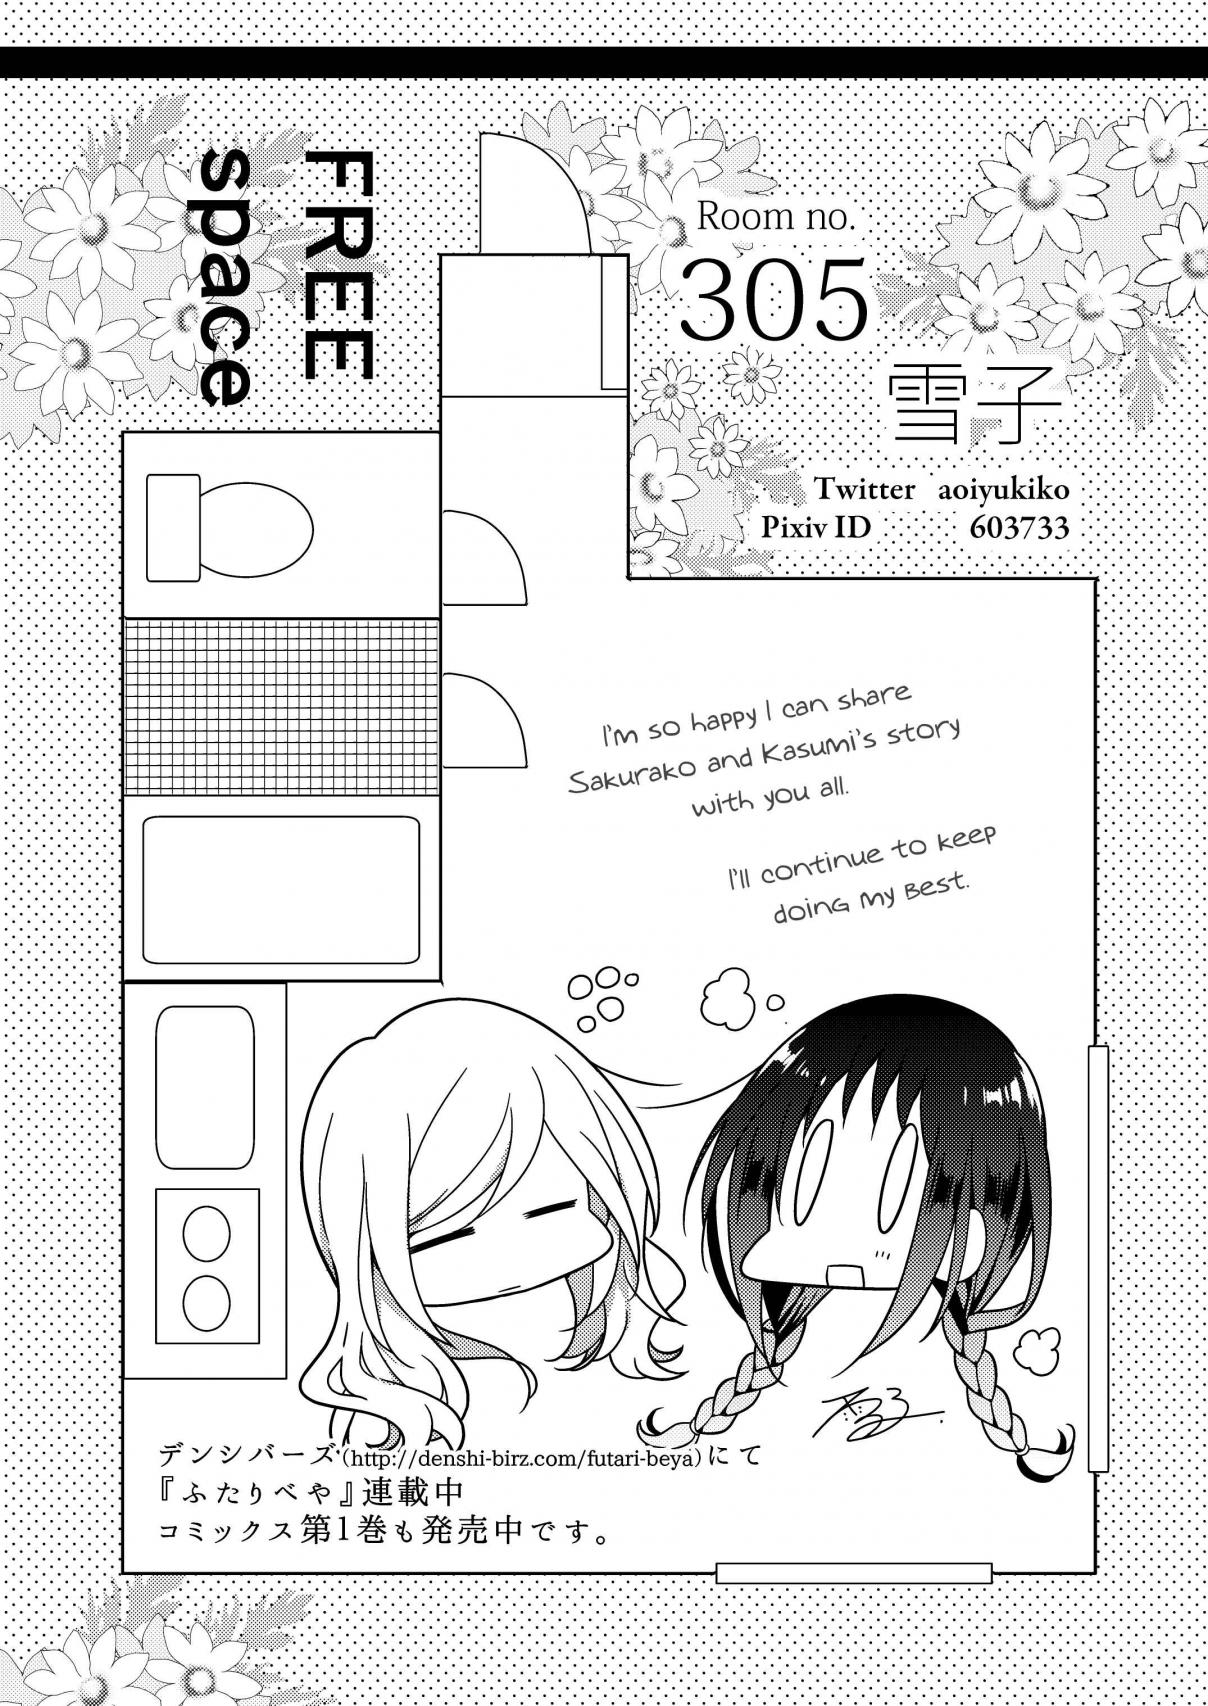 Futaribeya Anthology Ch. 14 Room 305 (Yukiko)